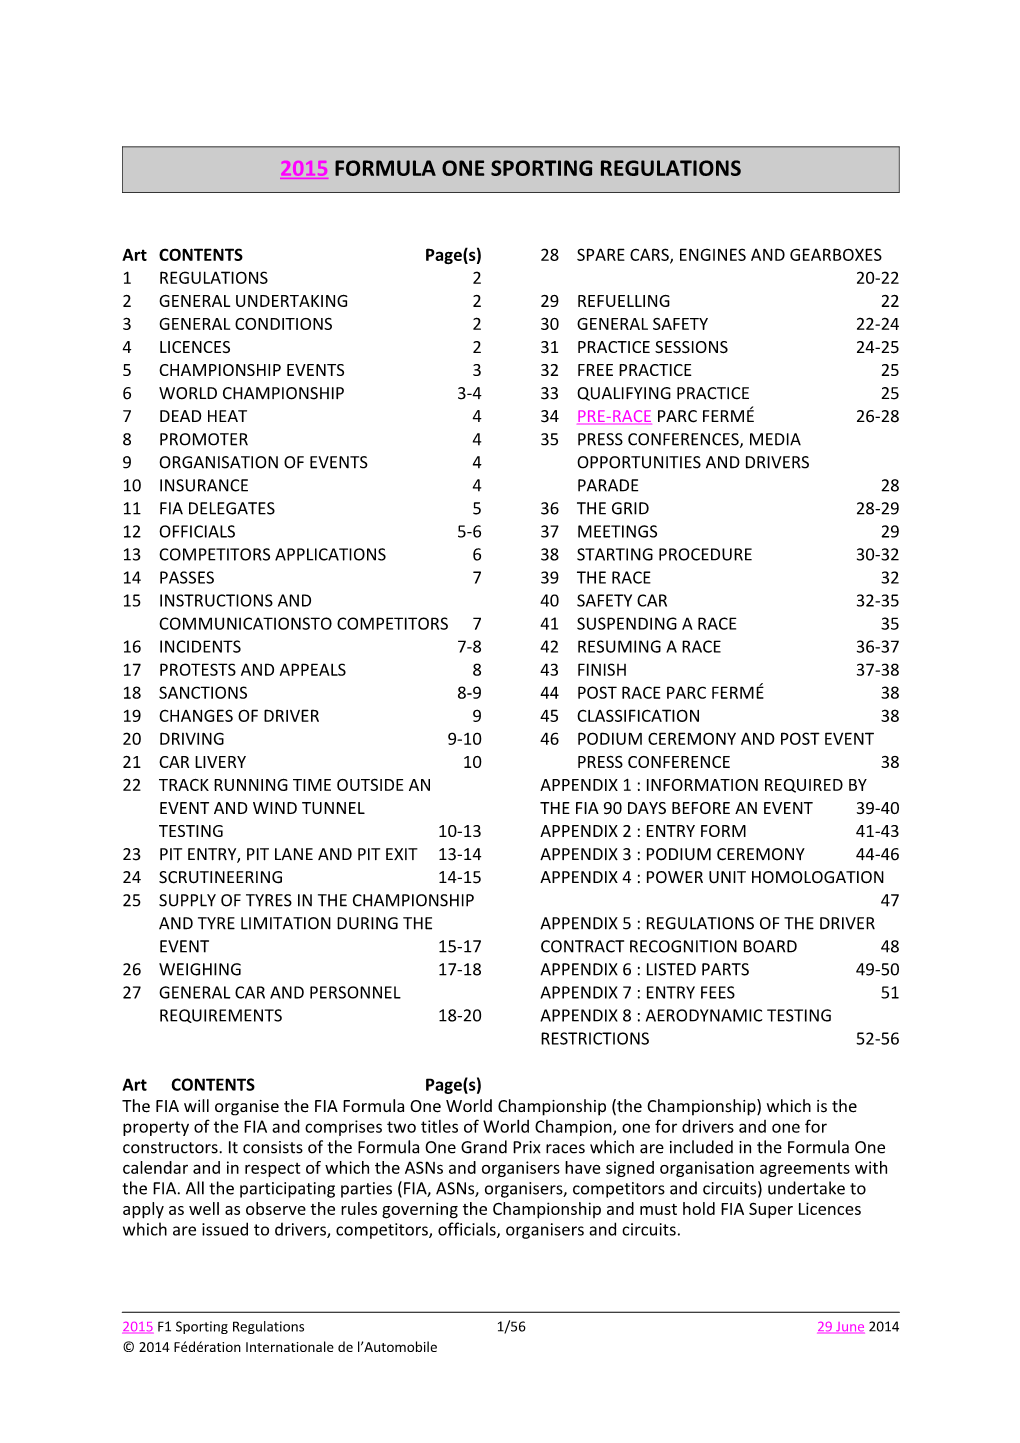 Draft 1999 F1 Sporting Regulations